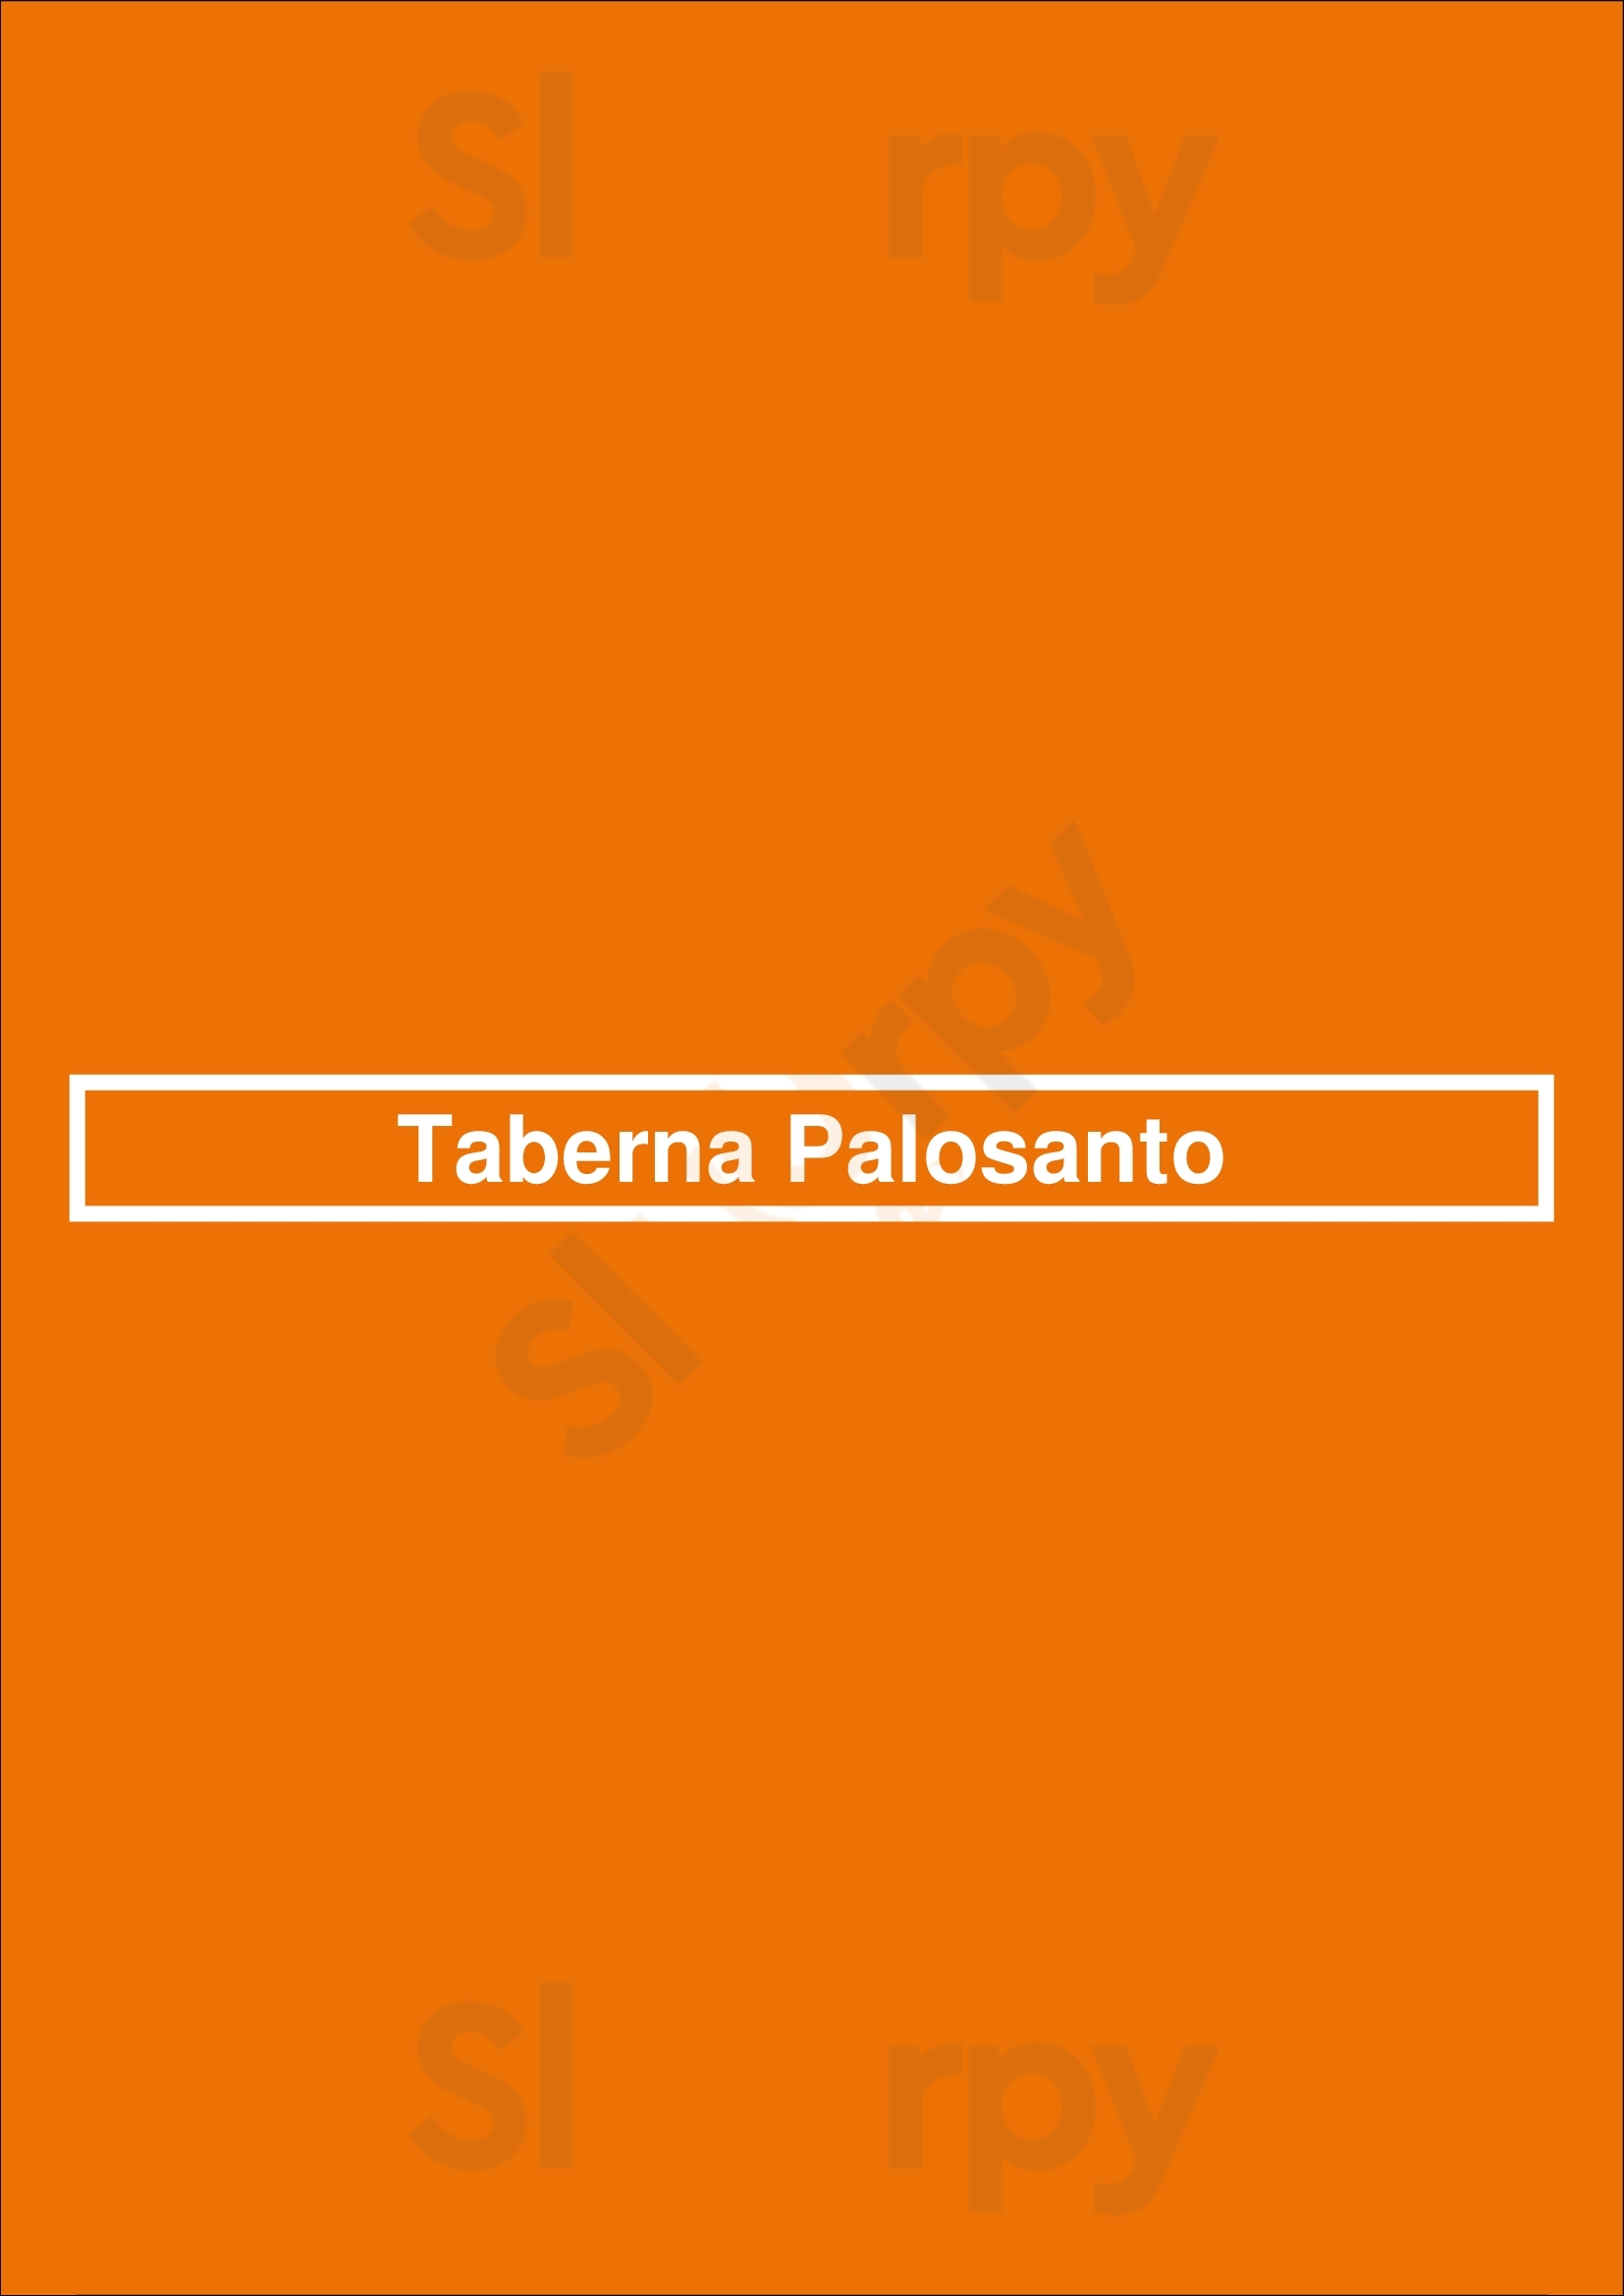 Taberna Palosanto Málaga Menu - 1